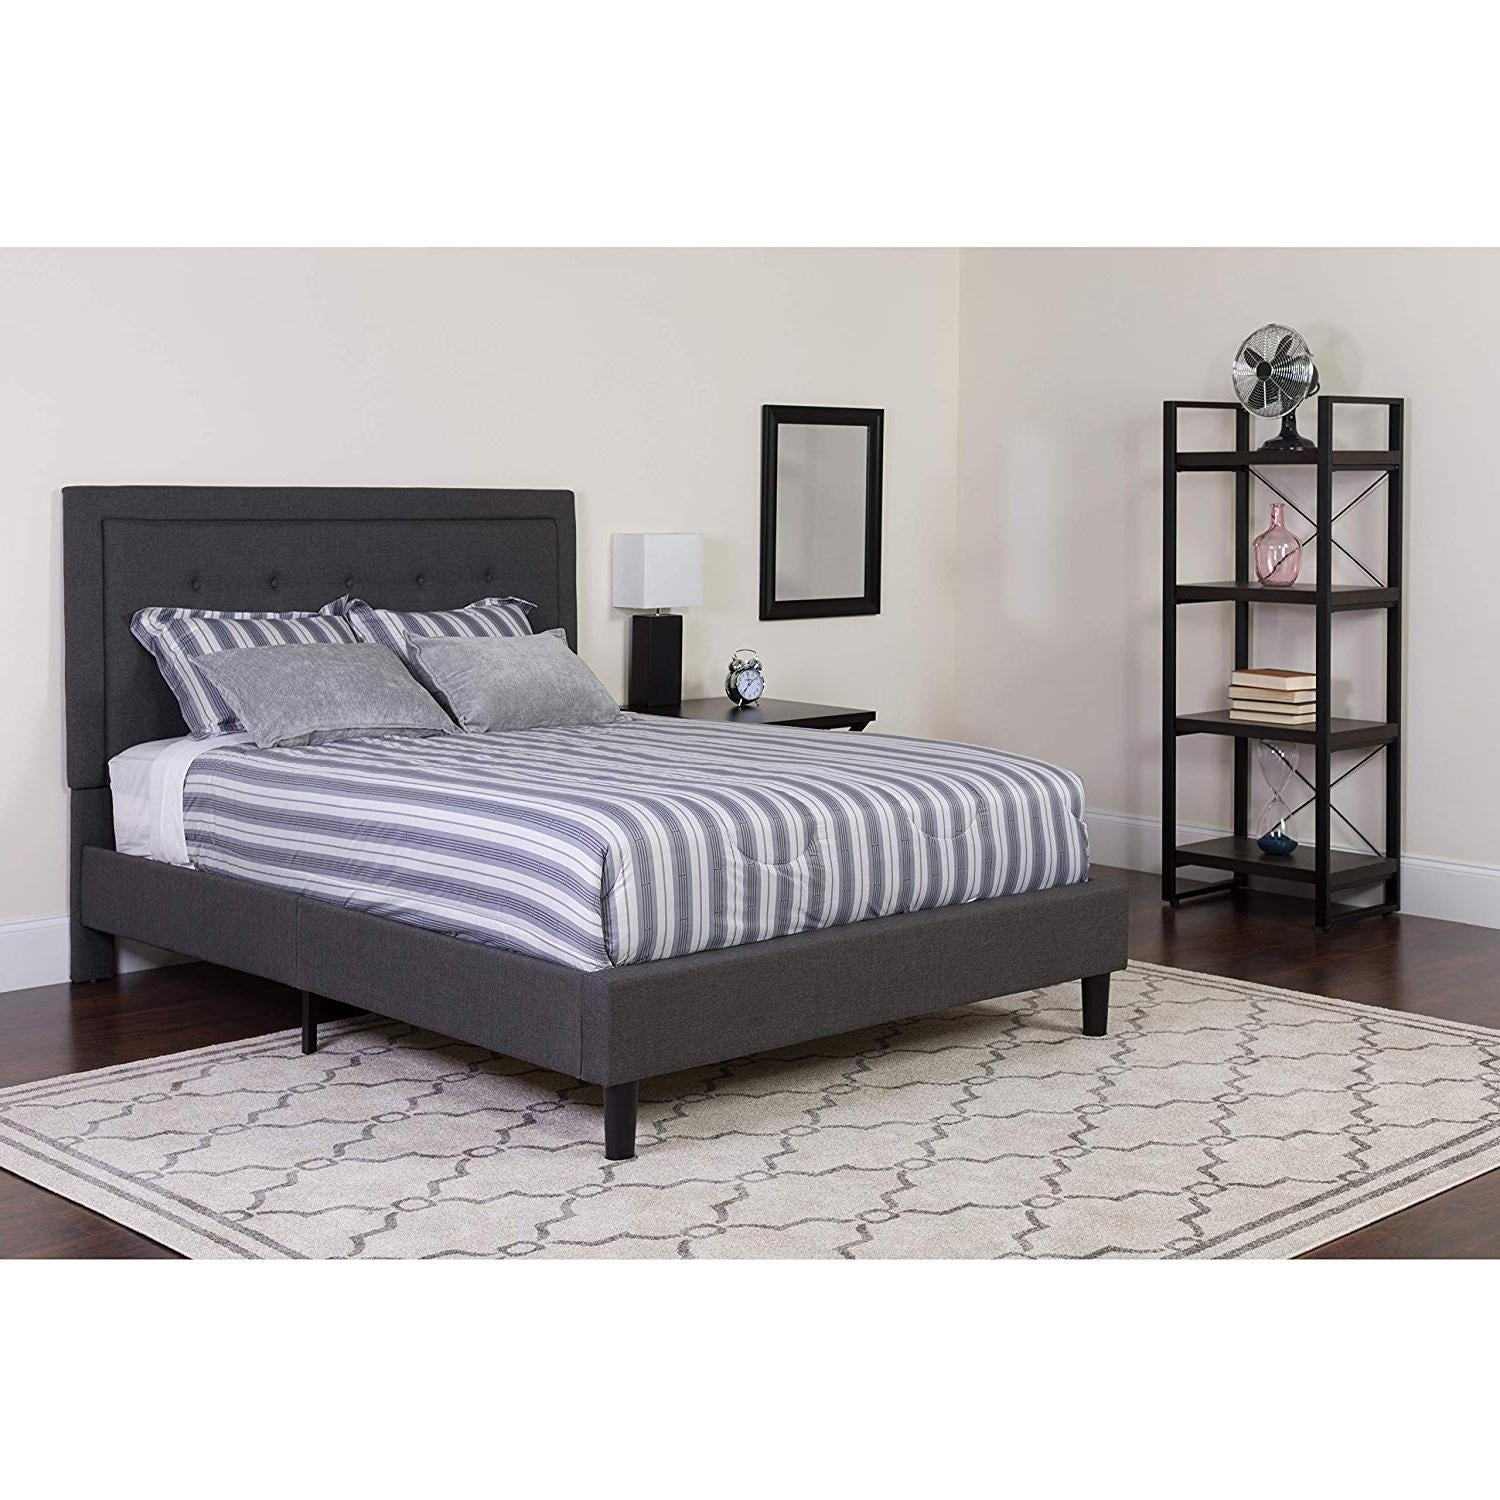 Bedroom > Bed Frames > Platform Beds - Queen Size Dark Gray Fabric Upholstered Platform Bed Frame With Headboard